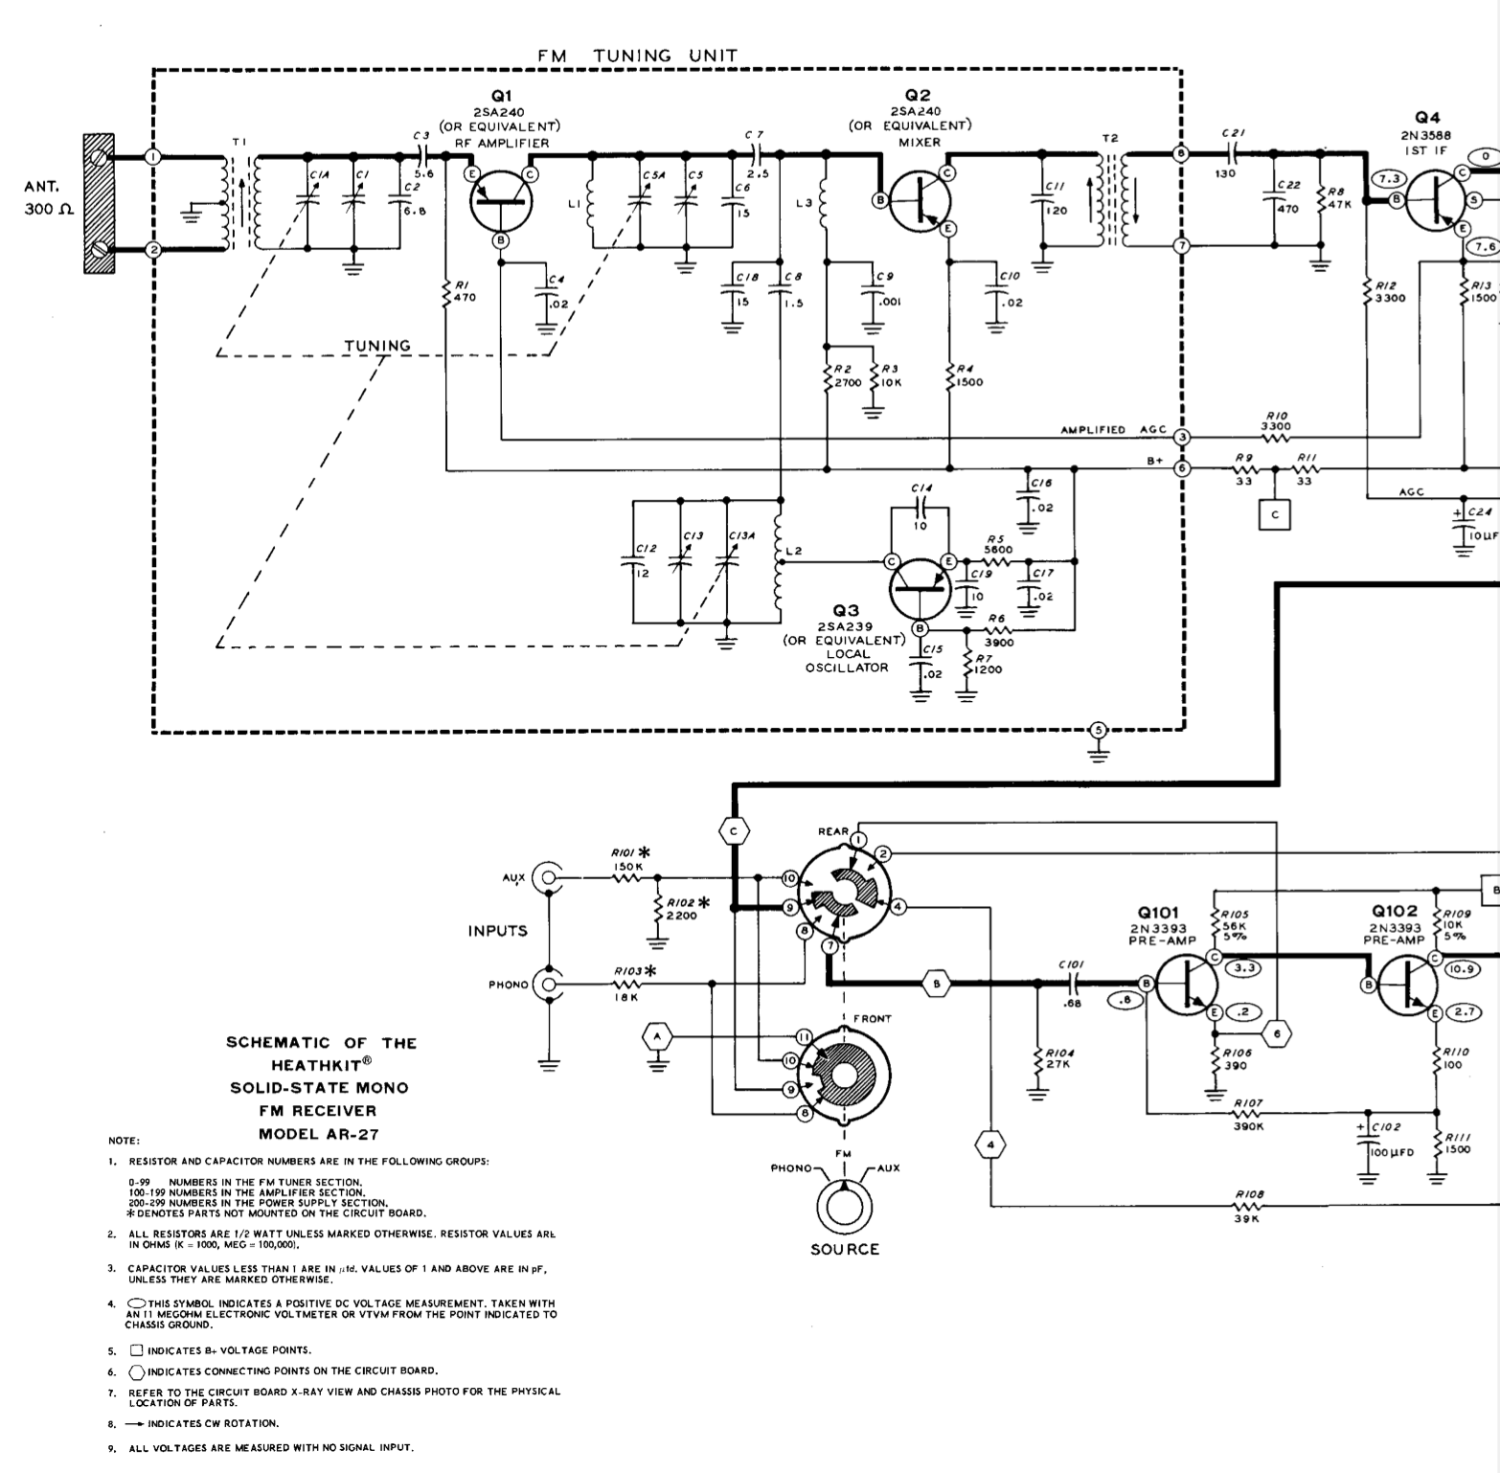 Heathkit AR-27 10 Watt FM Receiver - Schematic Diagrams